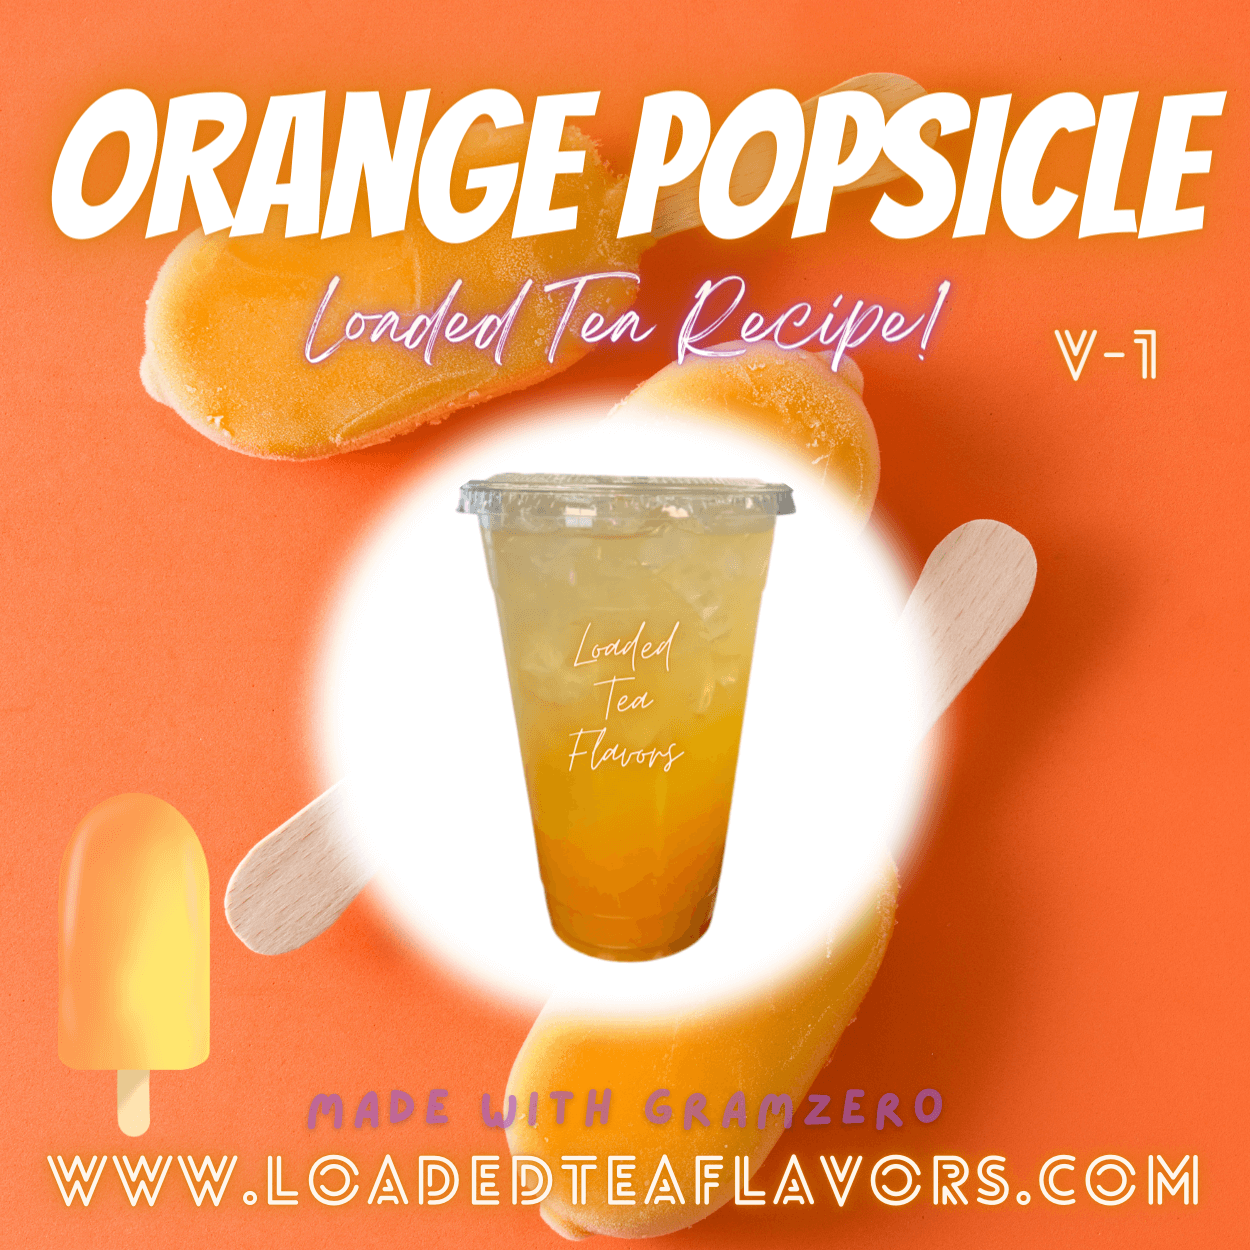 Orange Popsicle Flavored 🍊 Loaded Tea Recipe